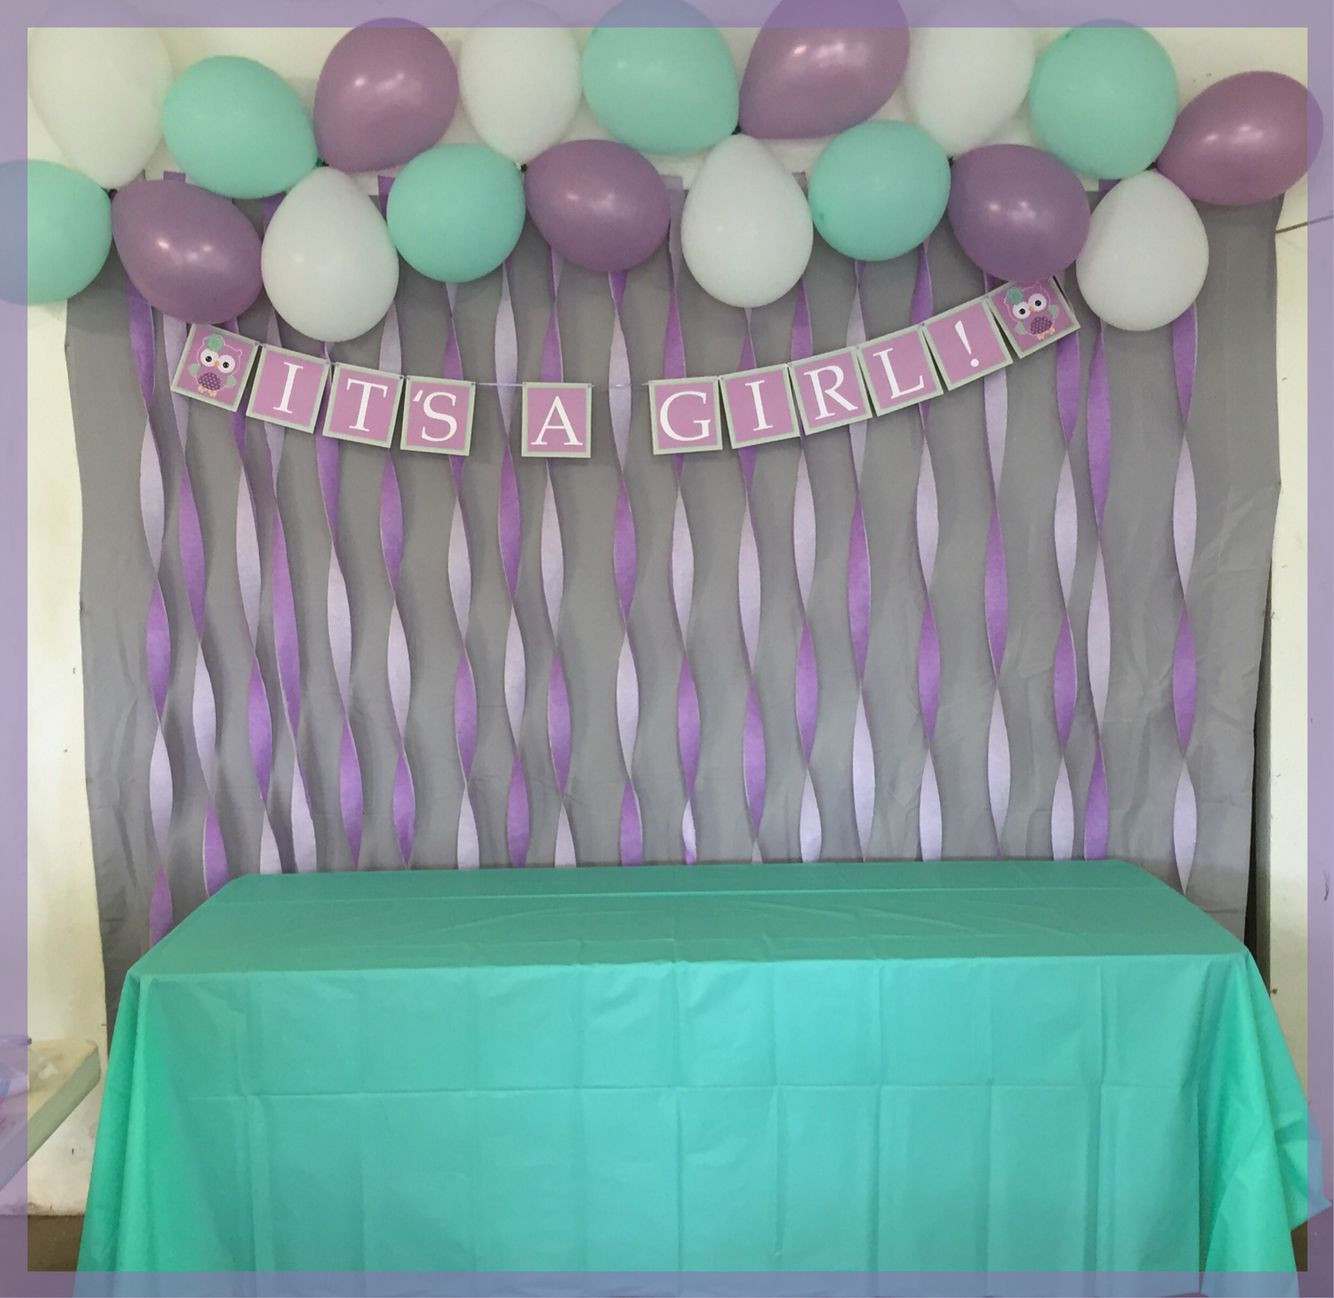 DIY Baby Shower Ideas For Girls
 Best 25 Diy baby shower decorations ideas on Pinterest